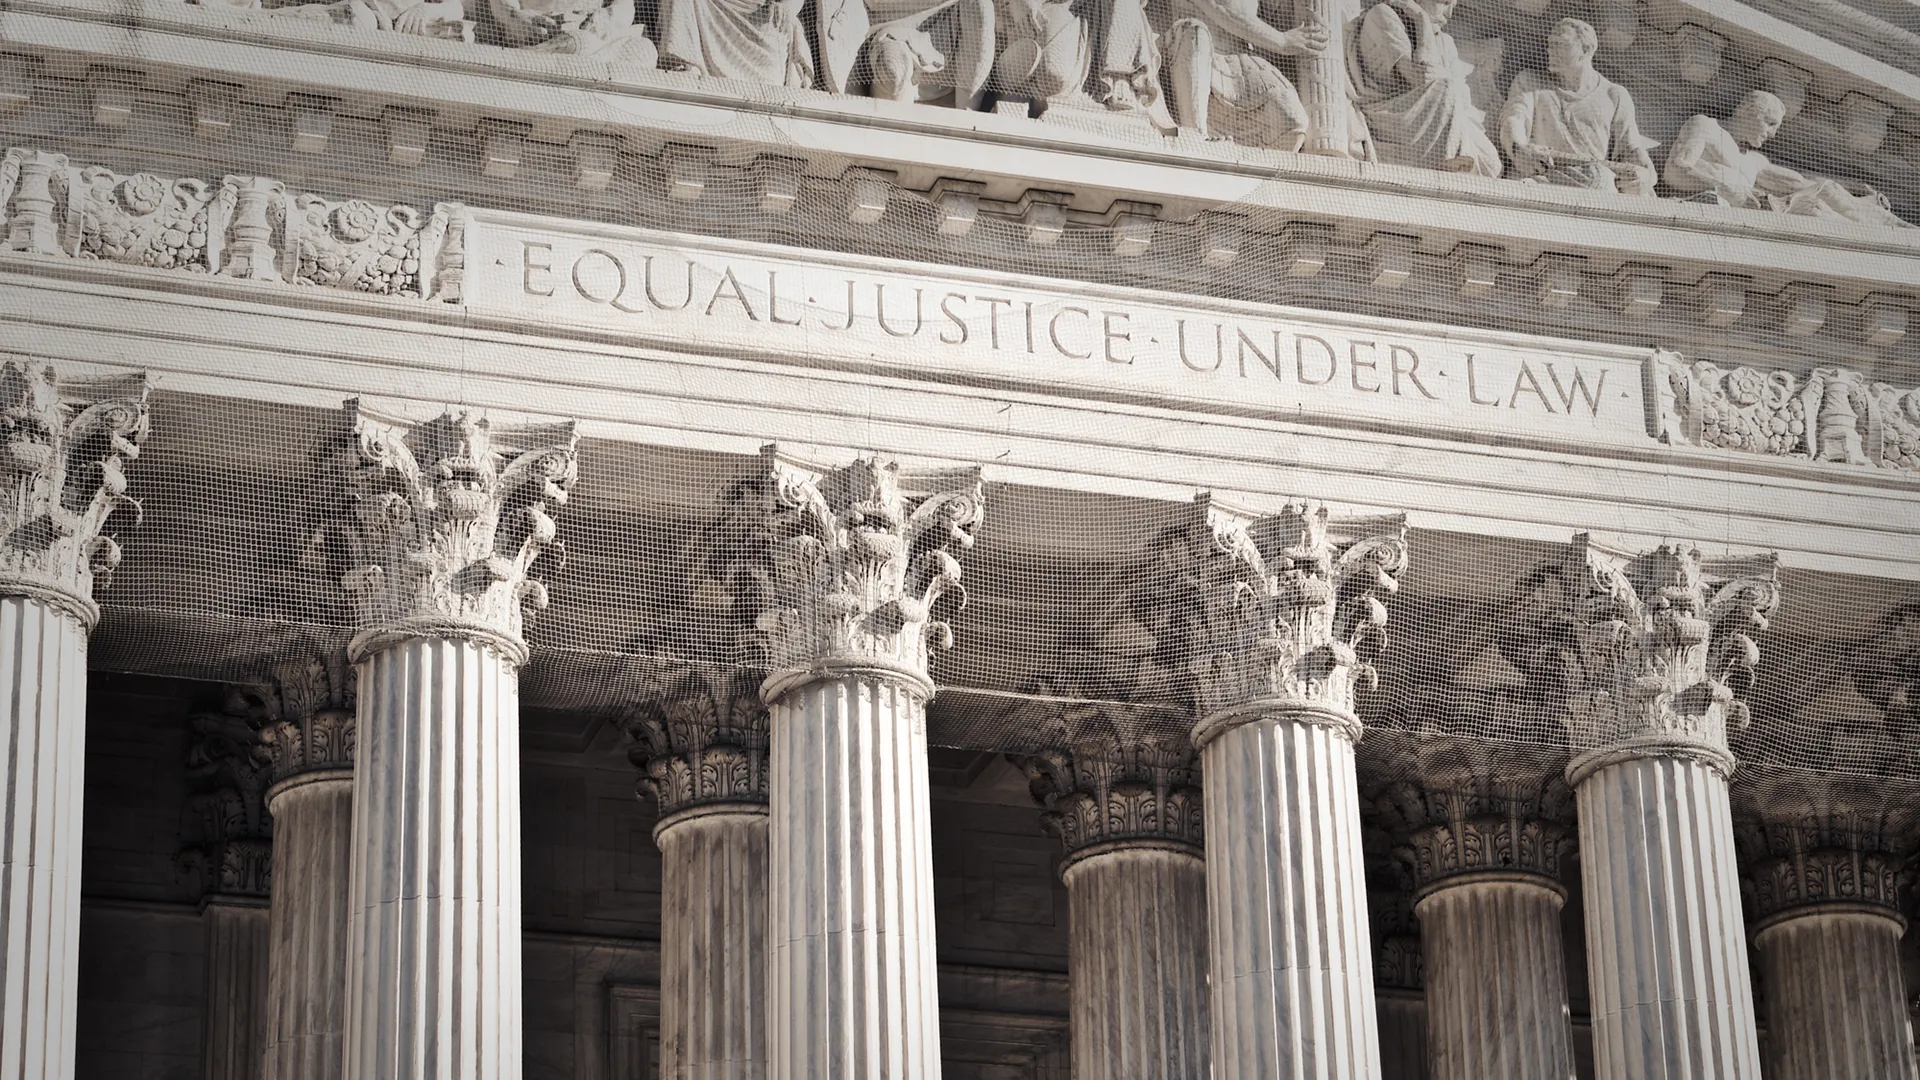 equal justice under law engraved on building